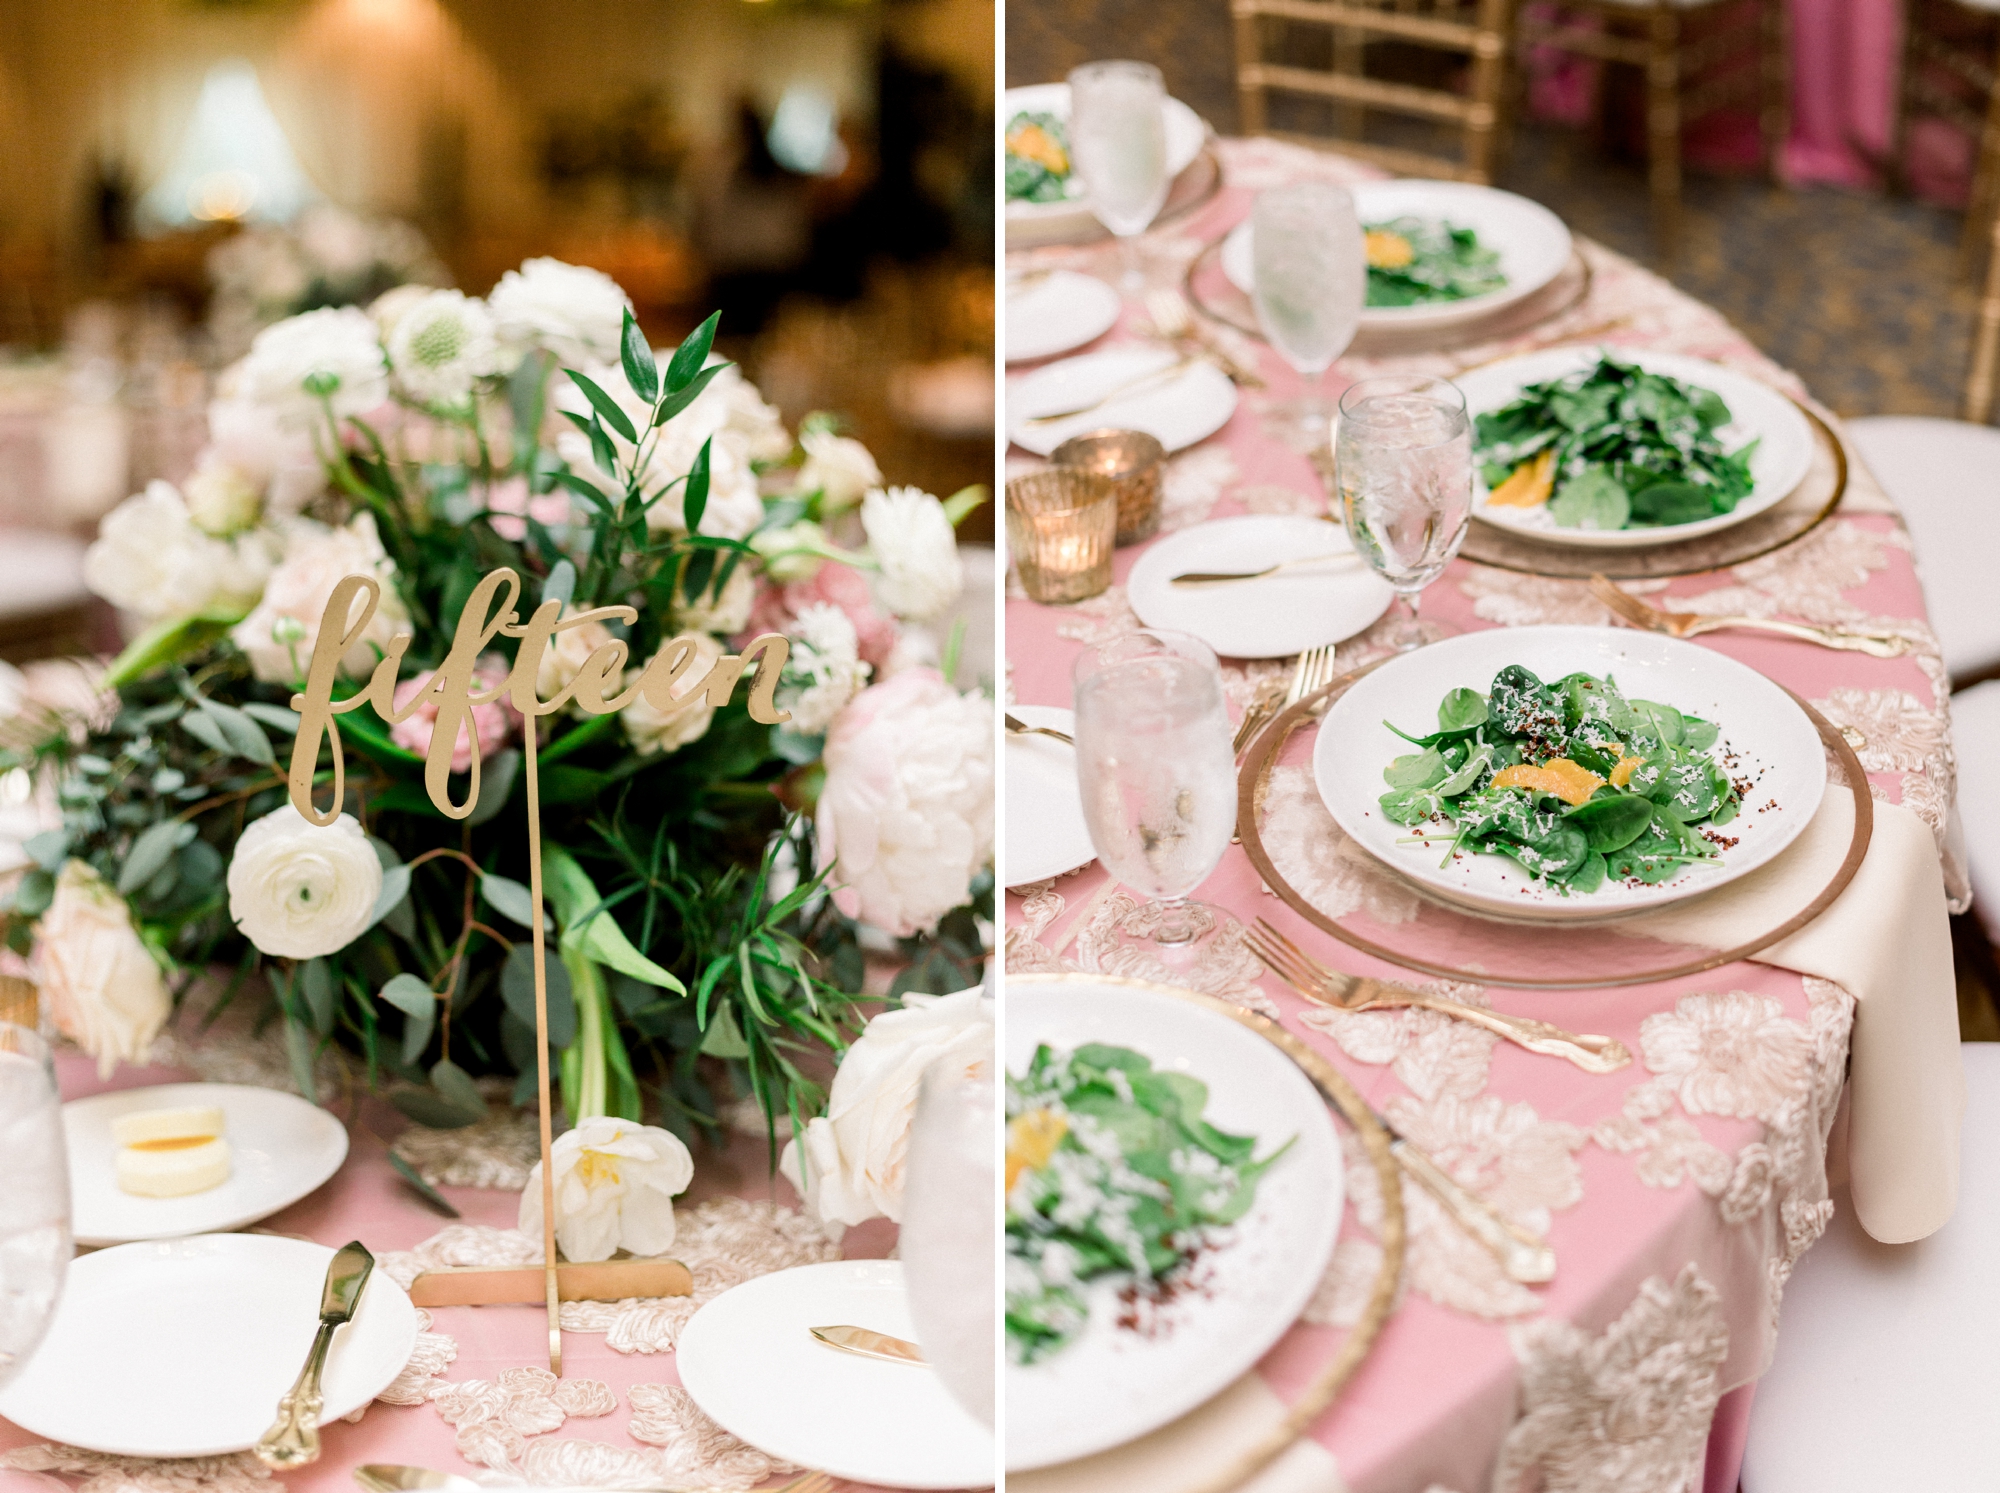 plated salad at wedding reception